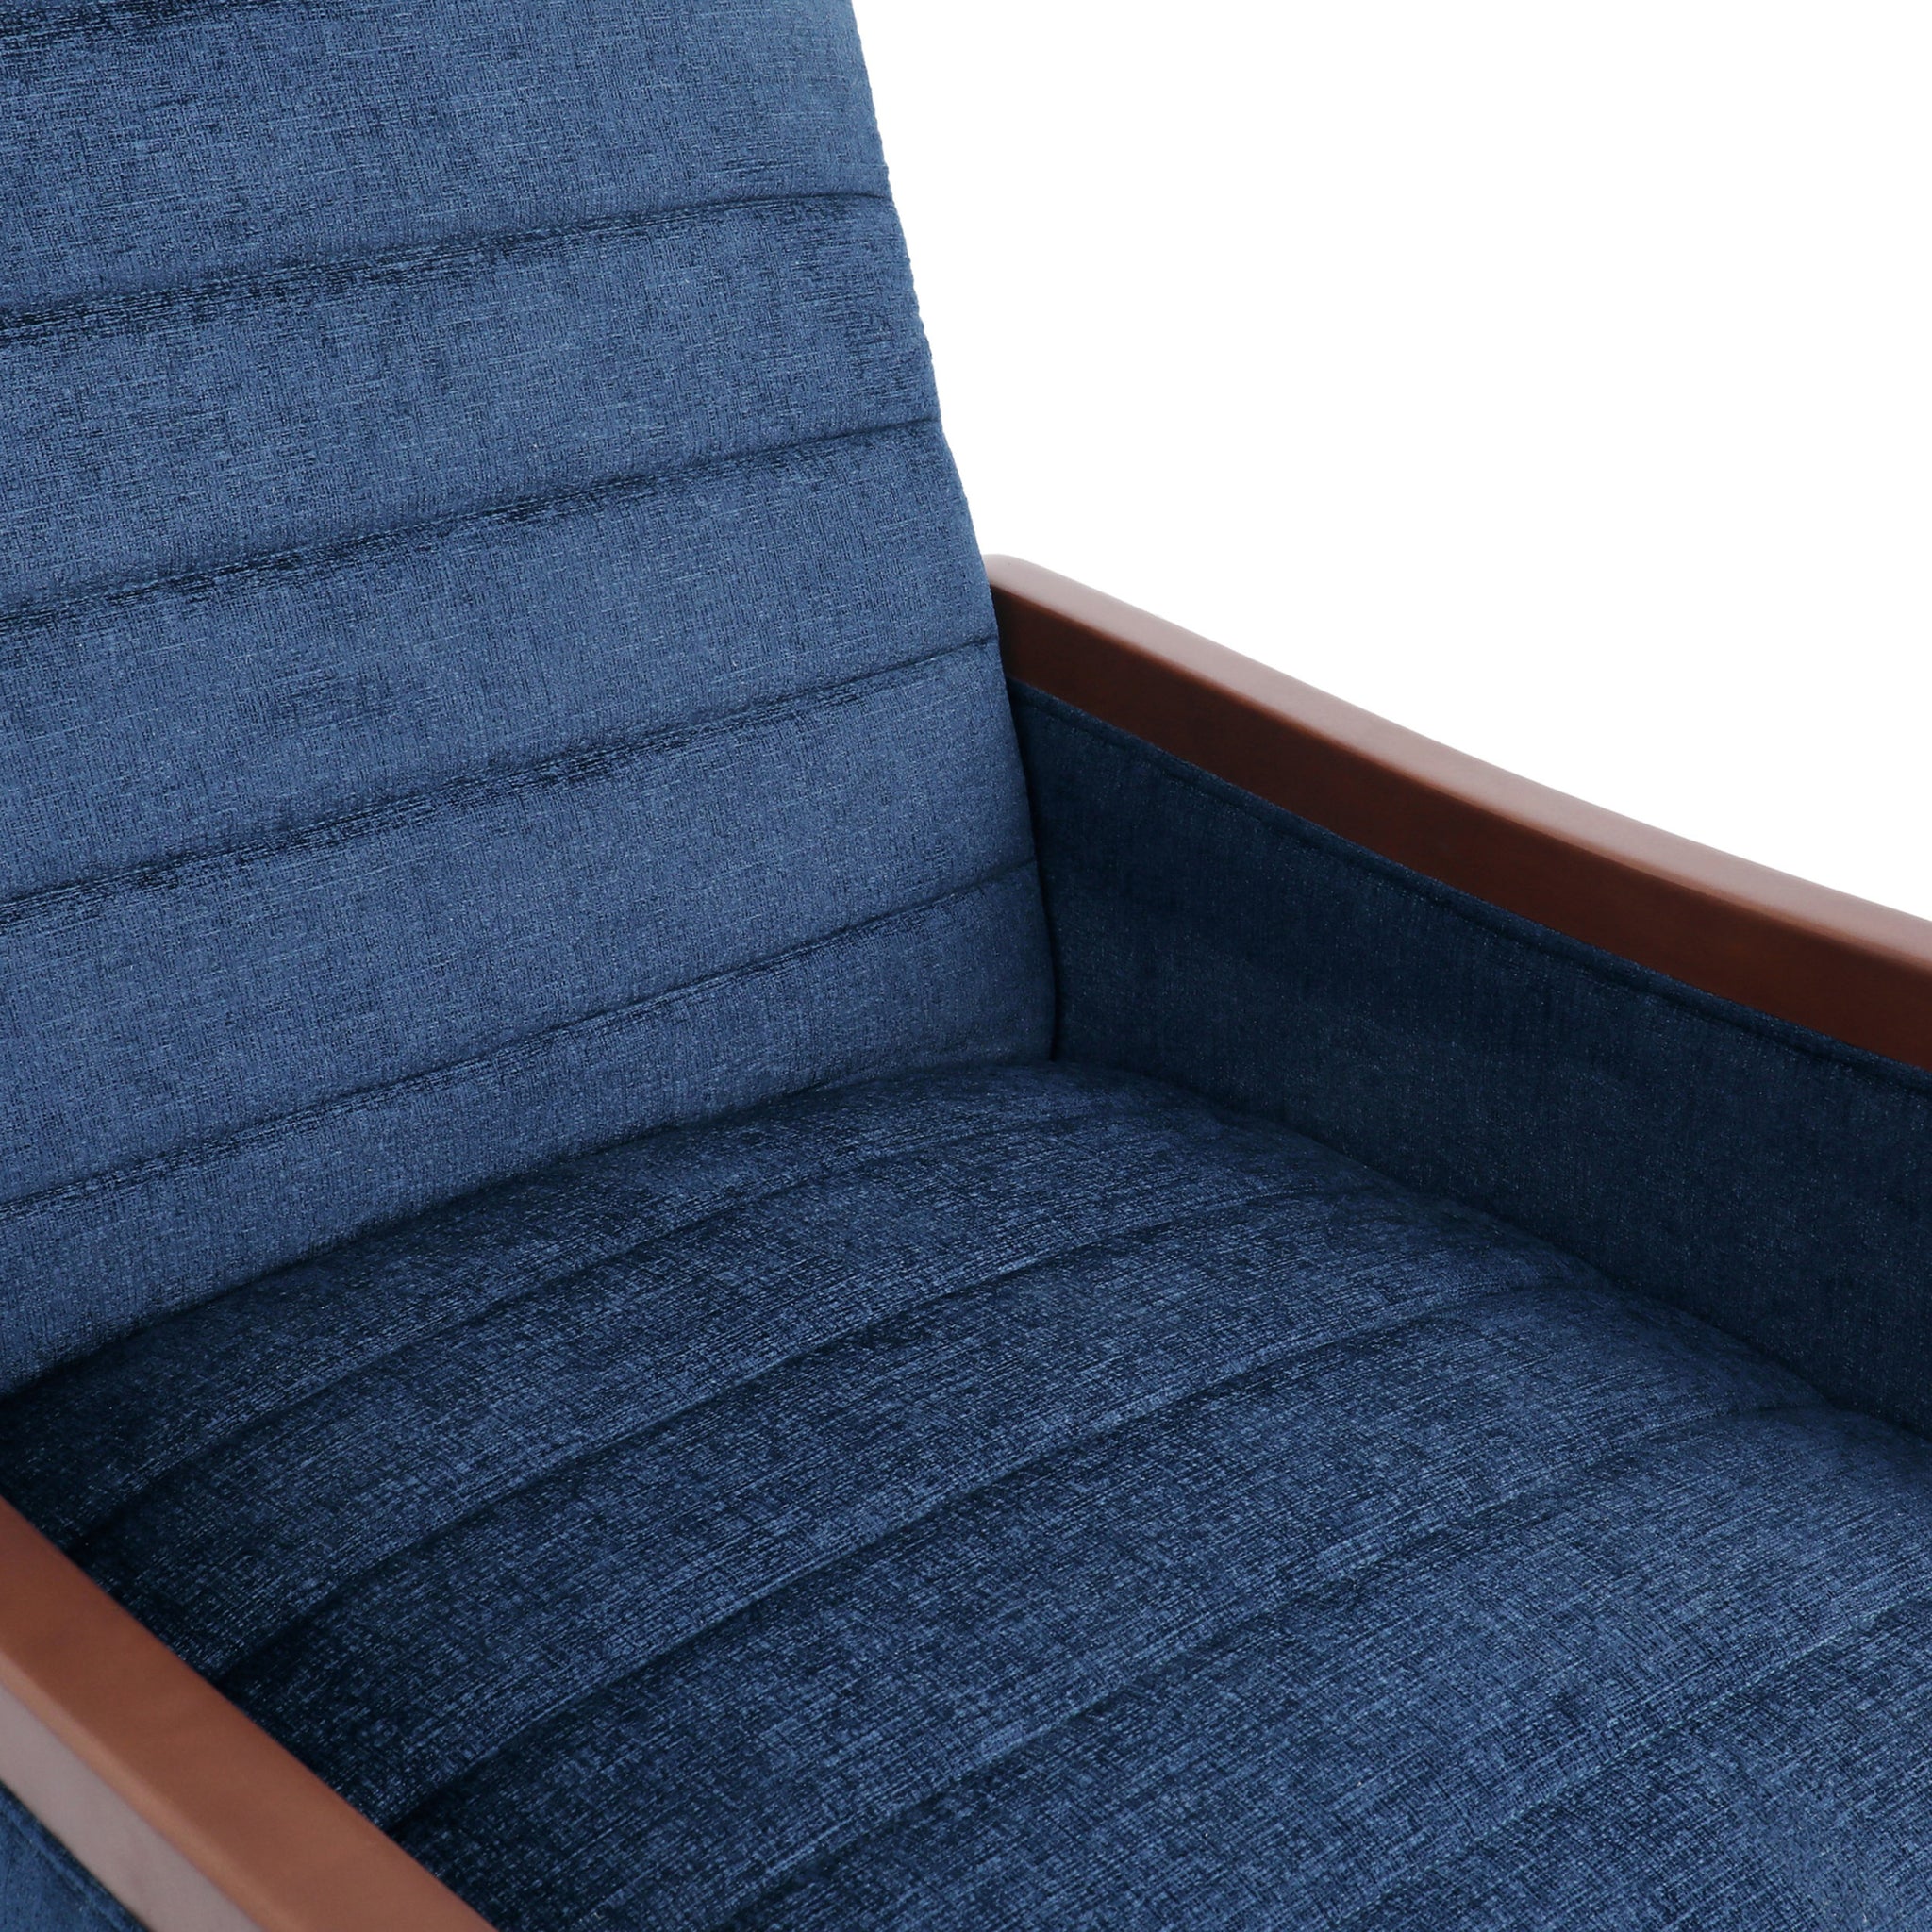 Mid Century Modern Fabric Channel Stitch Wood Pushback navy blue-fabric